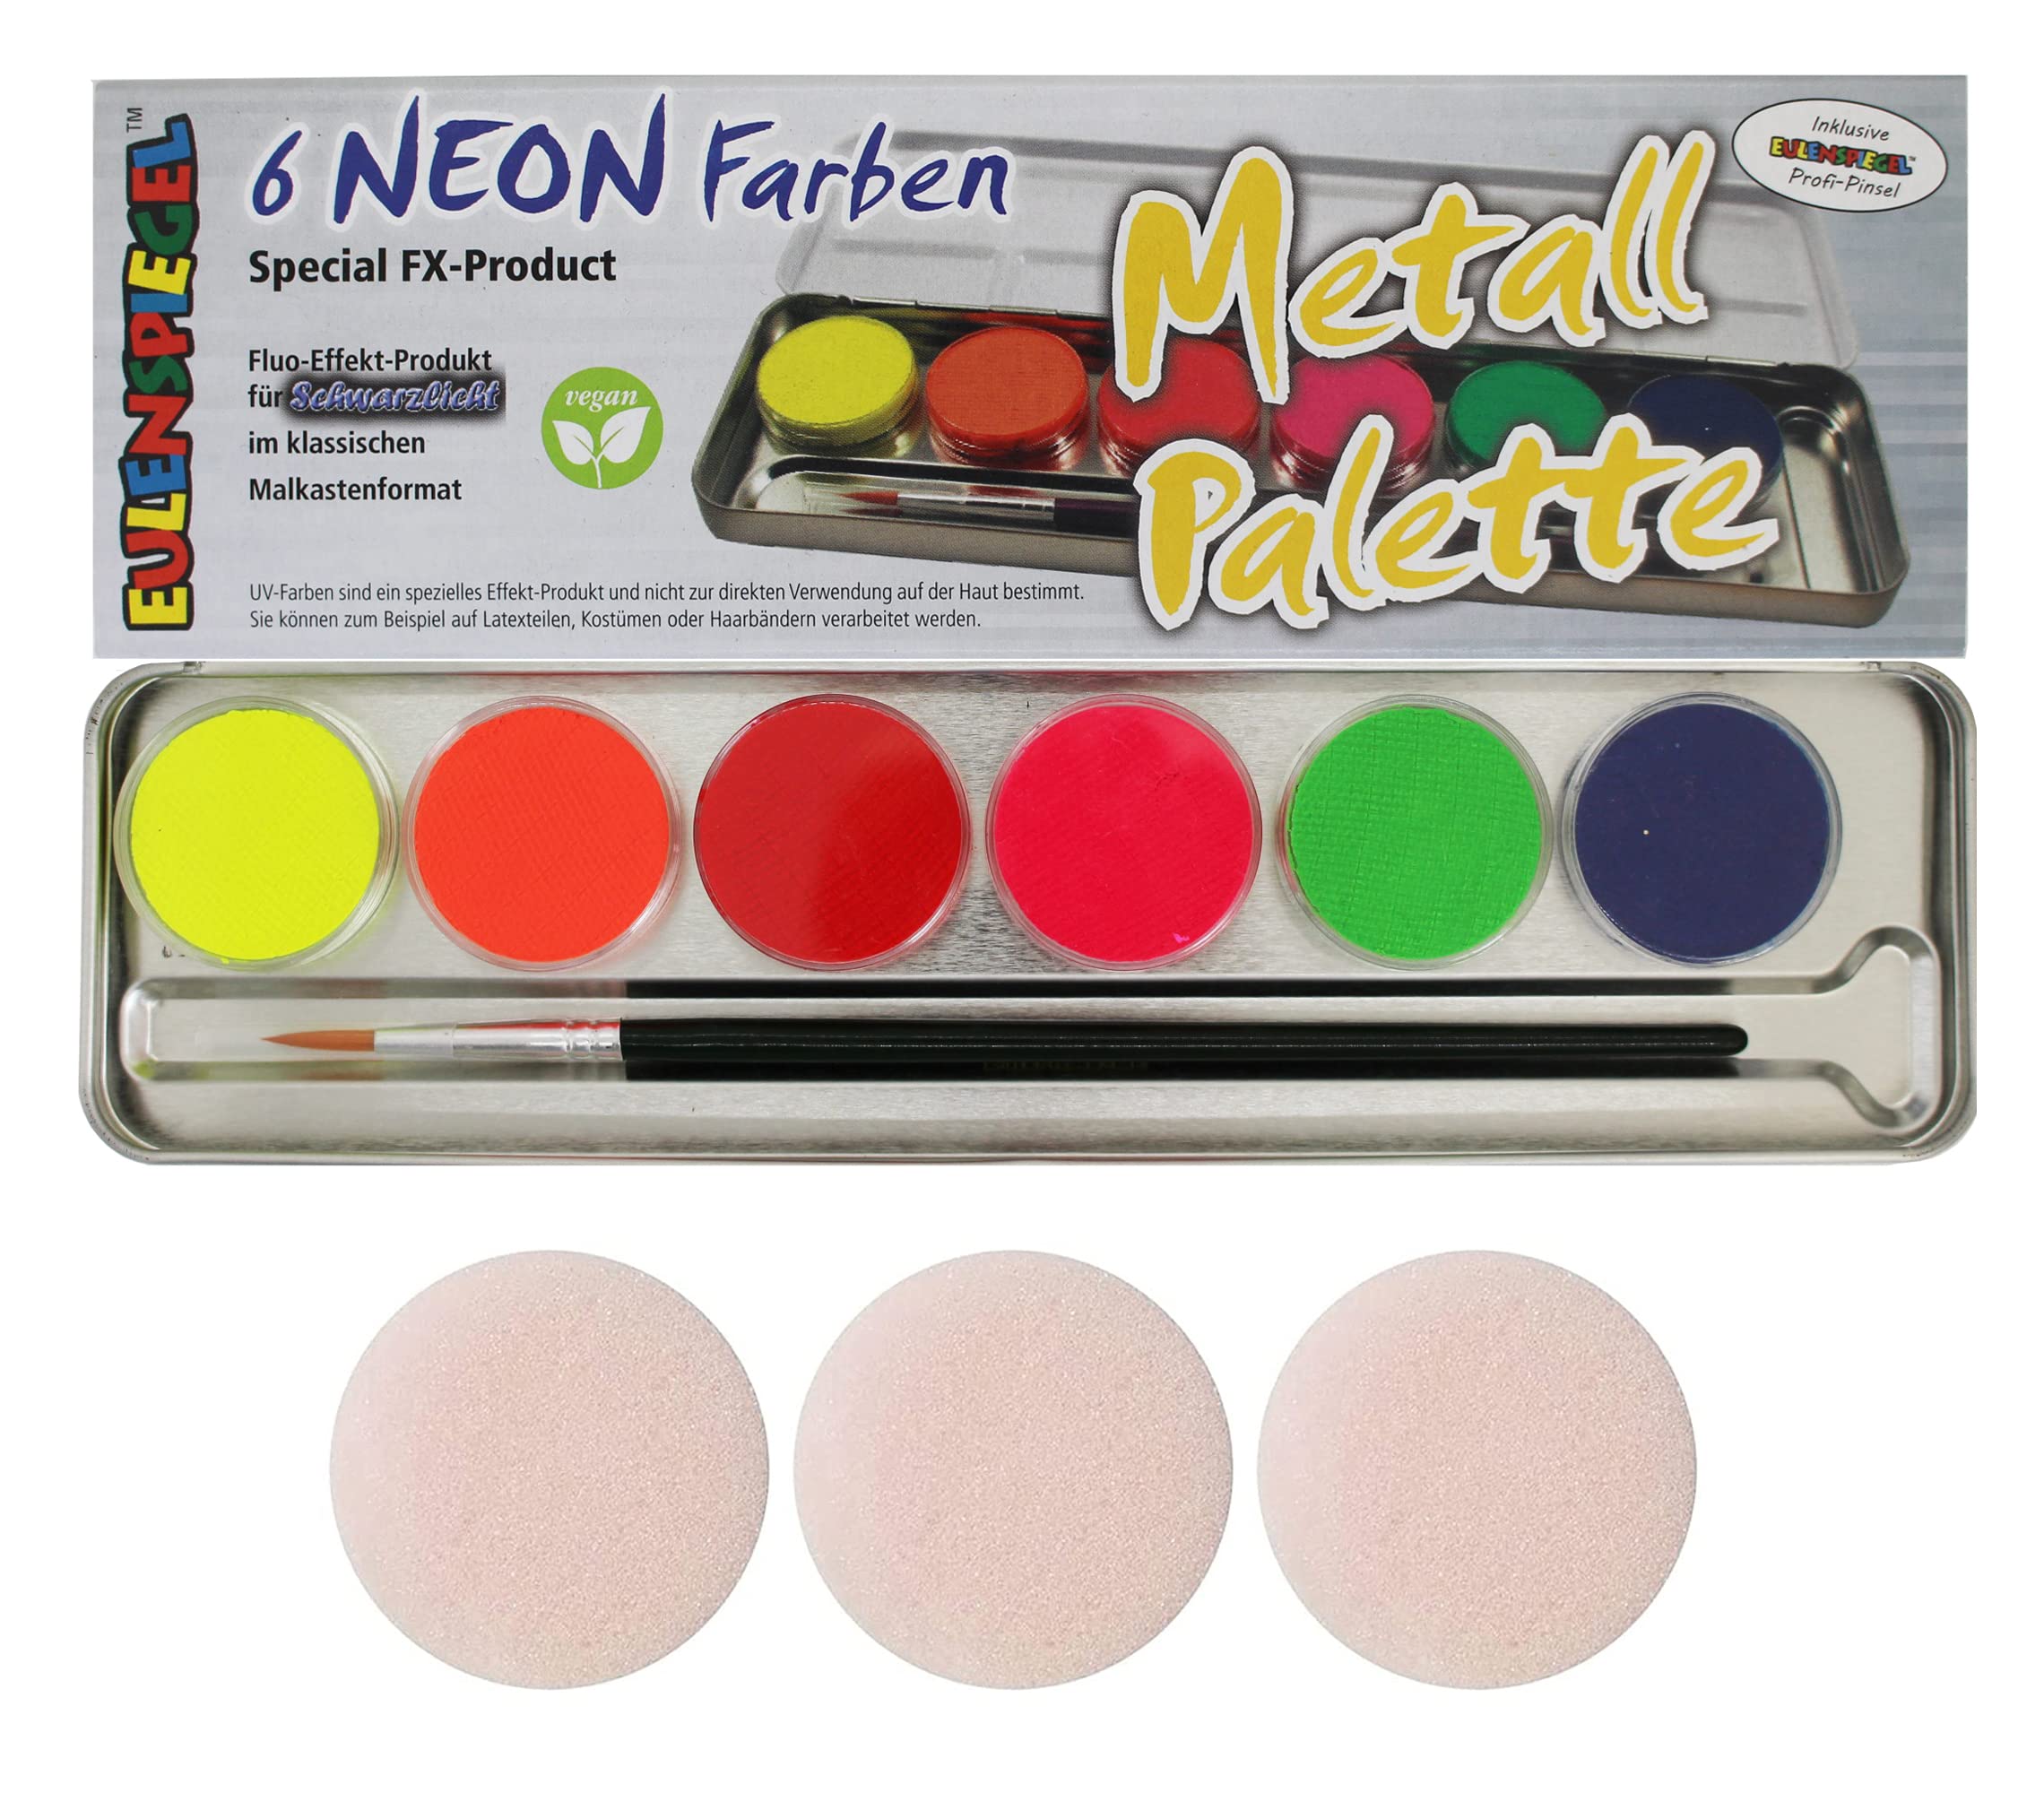 Eulenspiegel 423004 - Farb-Palette Neon, 6 X 5g UV-Farben, 1 Pinsel, Schminkset, Karneval, Mottoparty(Verpackung kann variieren)